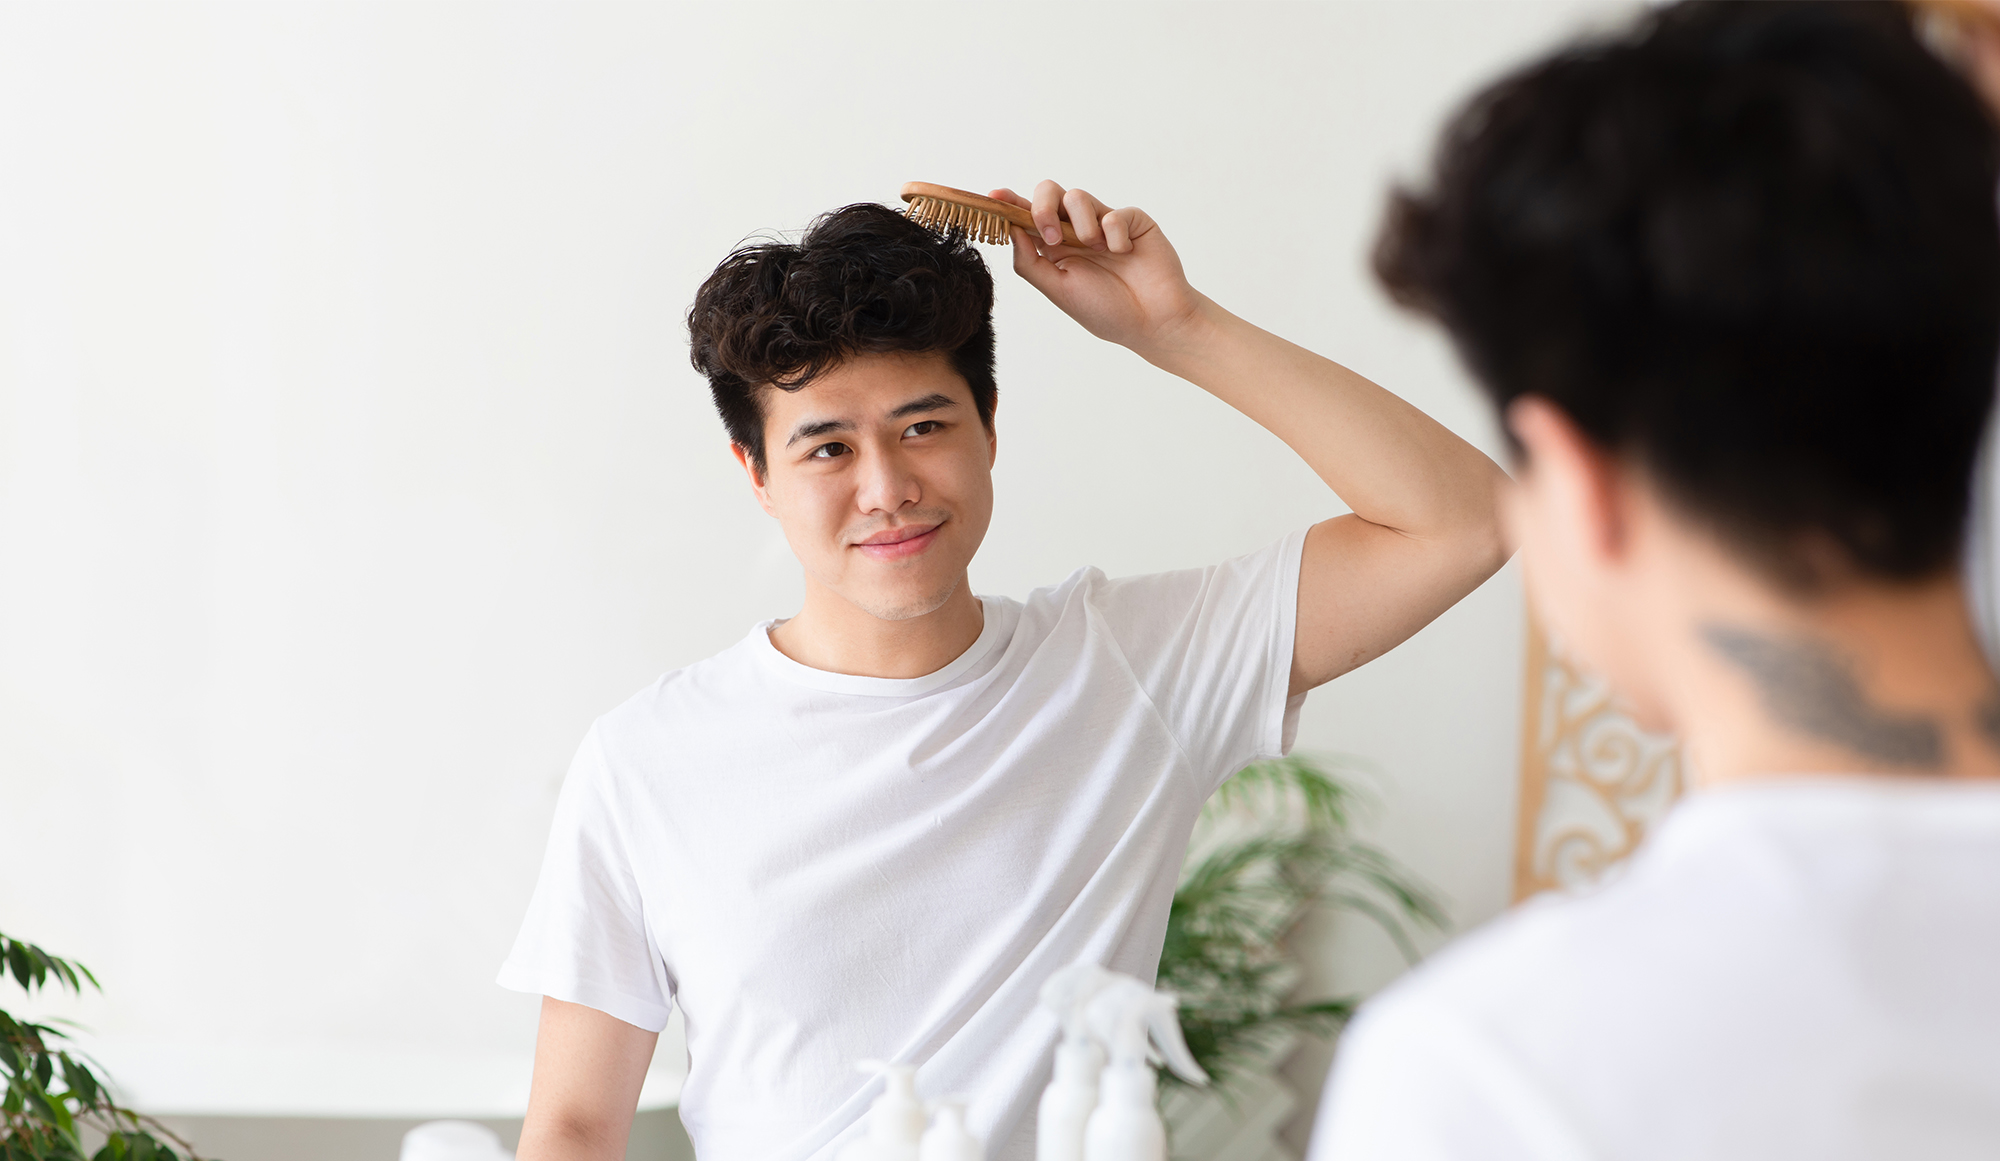 Hair Care For Men: 10 Tips For Healthy Hair